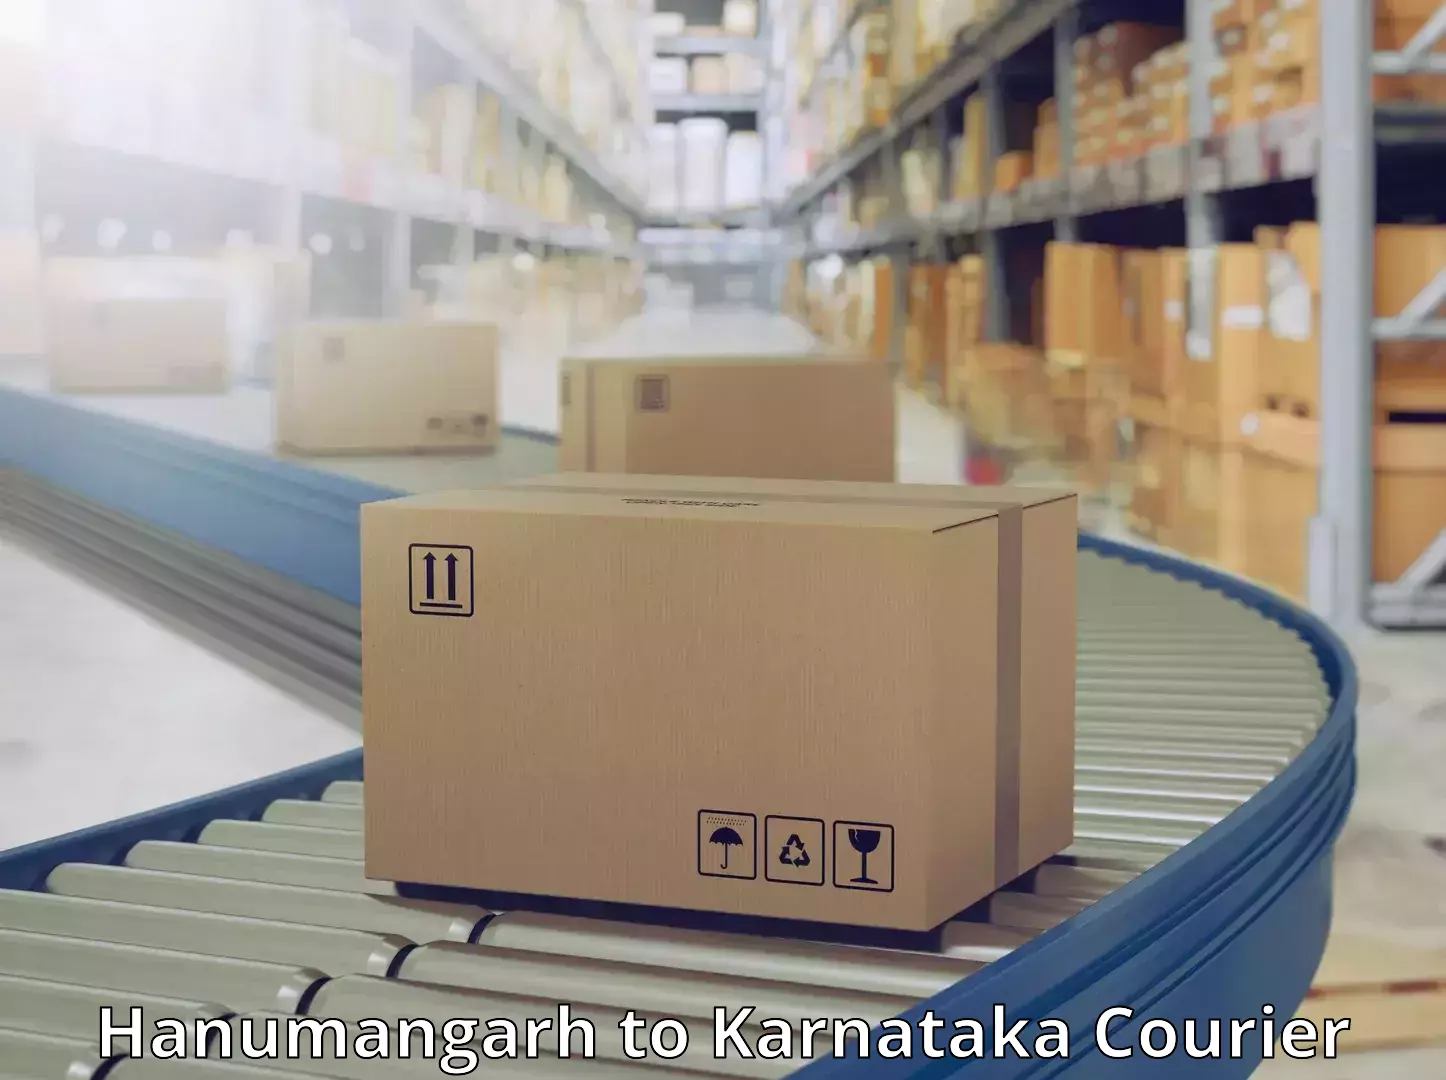 Express delivery capabilities Hanumangarh to Karnataka